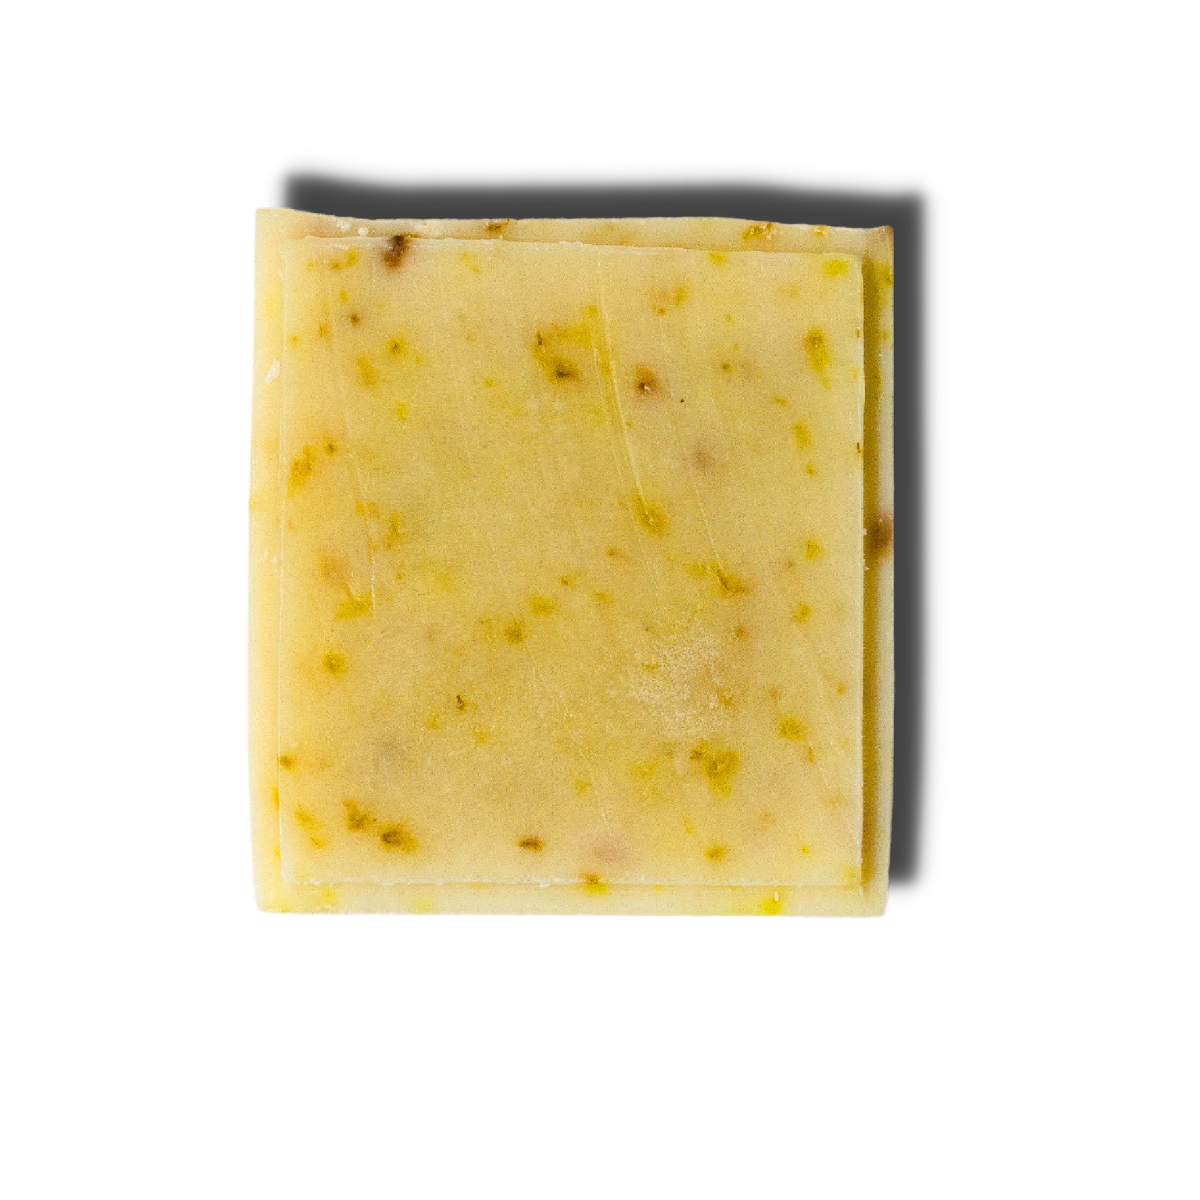 Marigold Soap Bar up close